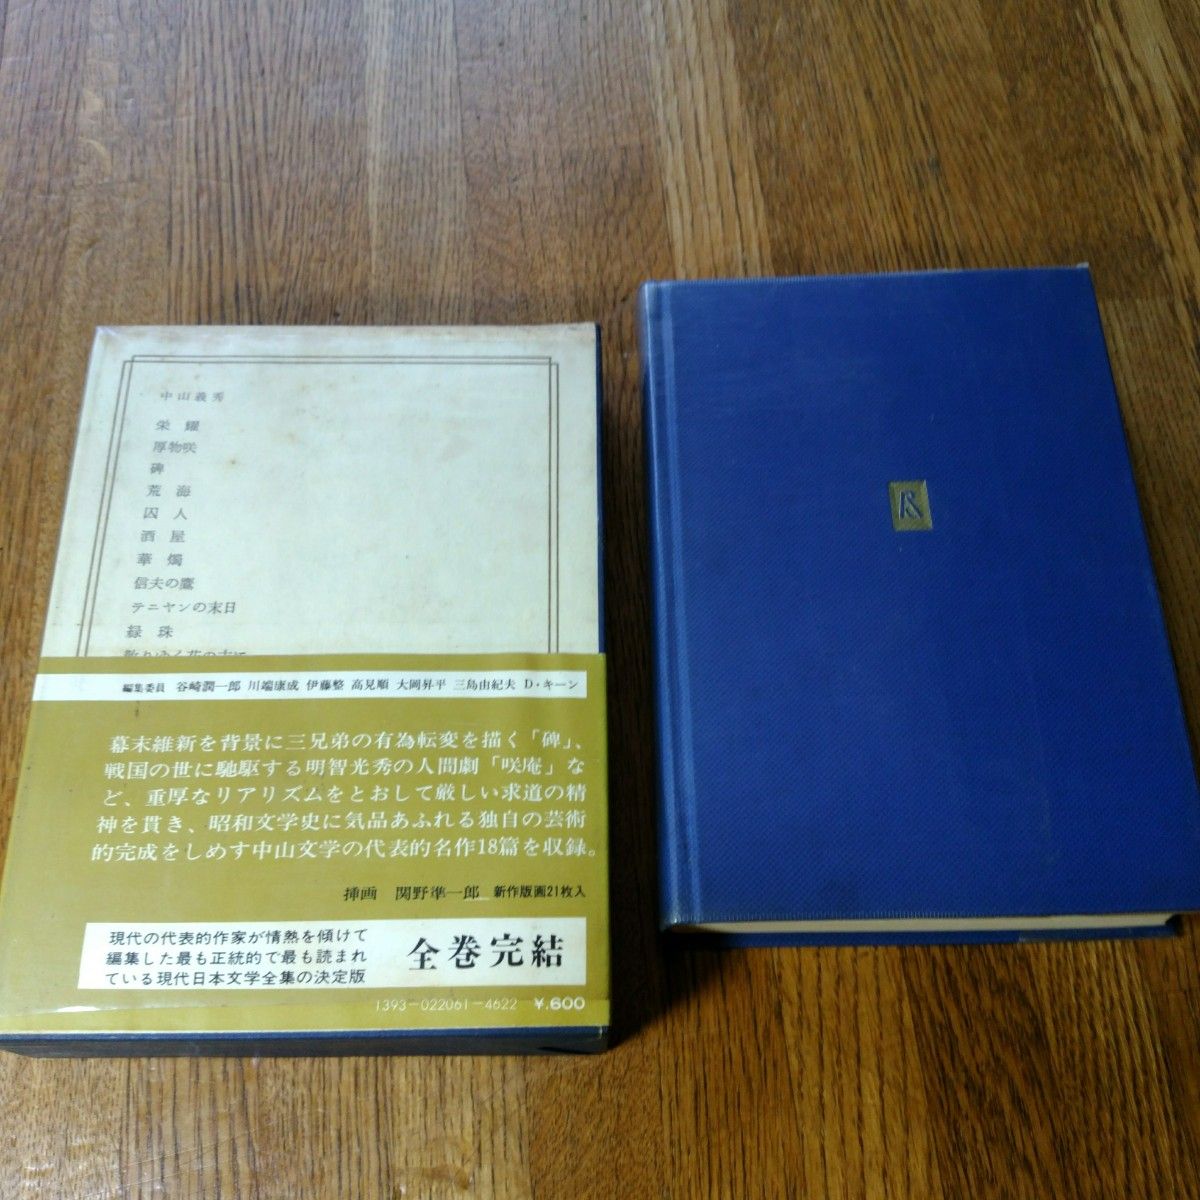 日本の文学(61)　中山義秀　中央公論社